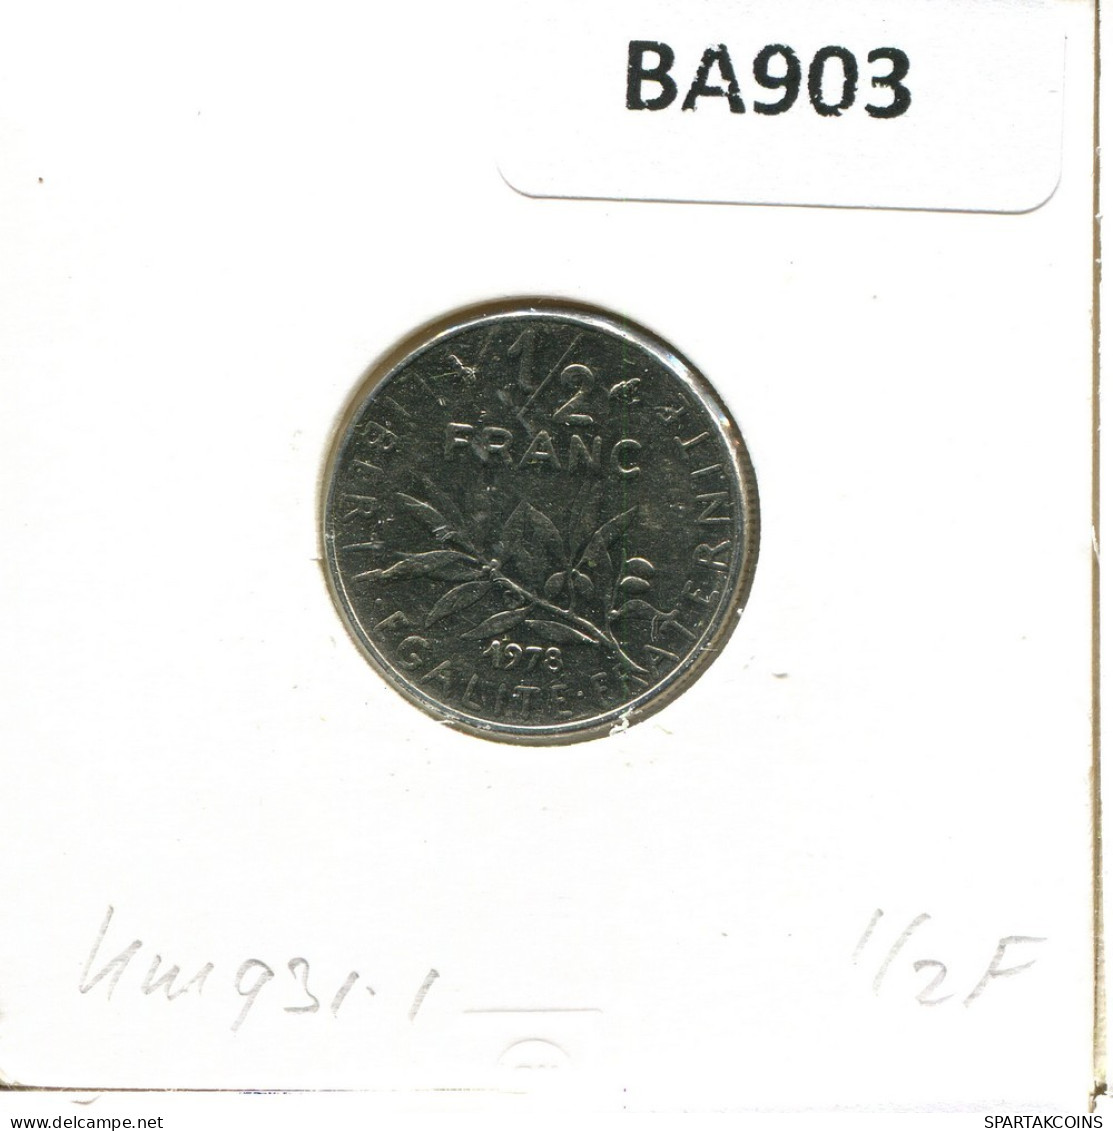 1/2 FRANC 1978 FRANCE Coin French Coin #BA903.U.A - 1/2 Franc